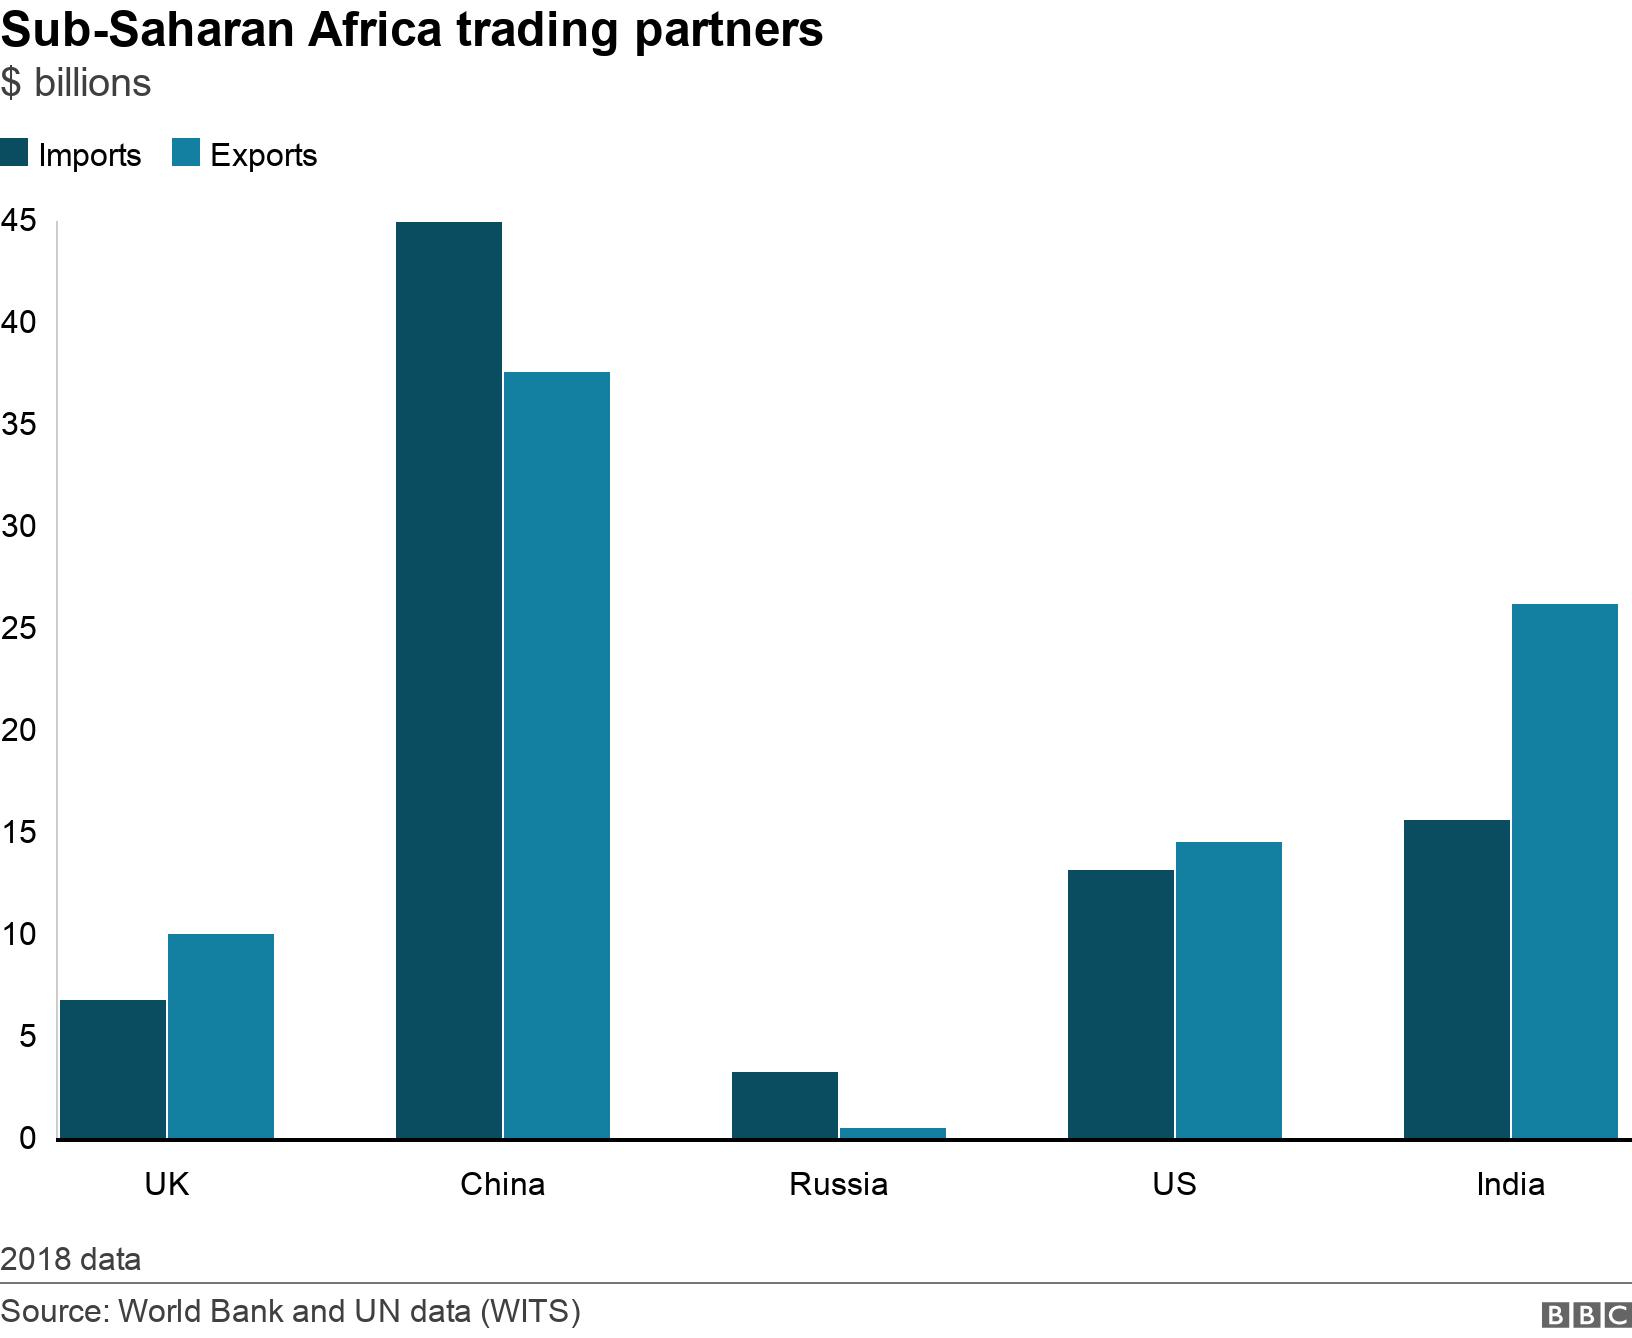 Sub-Saharan Africa trading partners. $ billions.  2018 data.